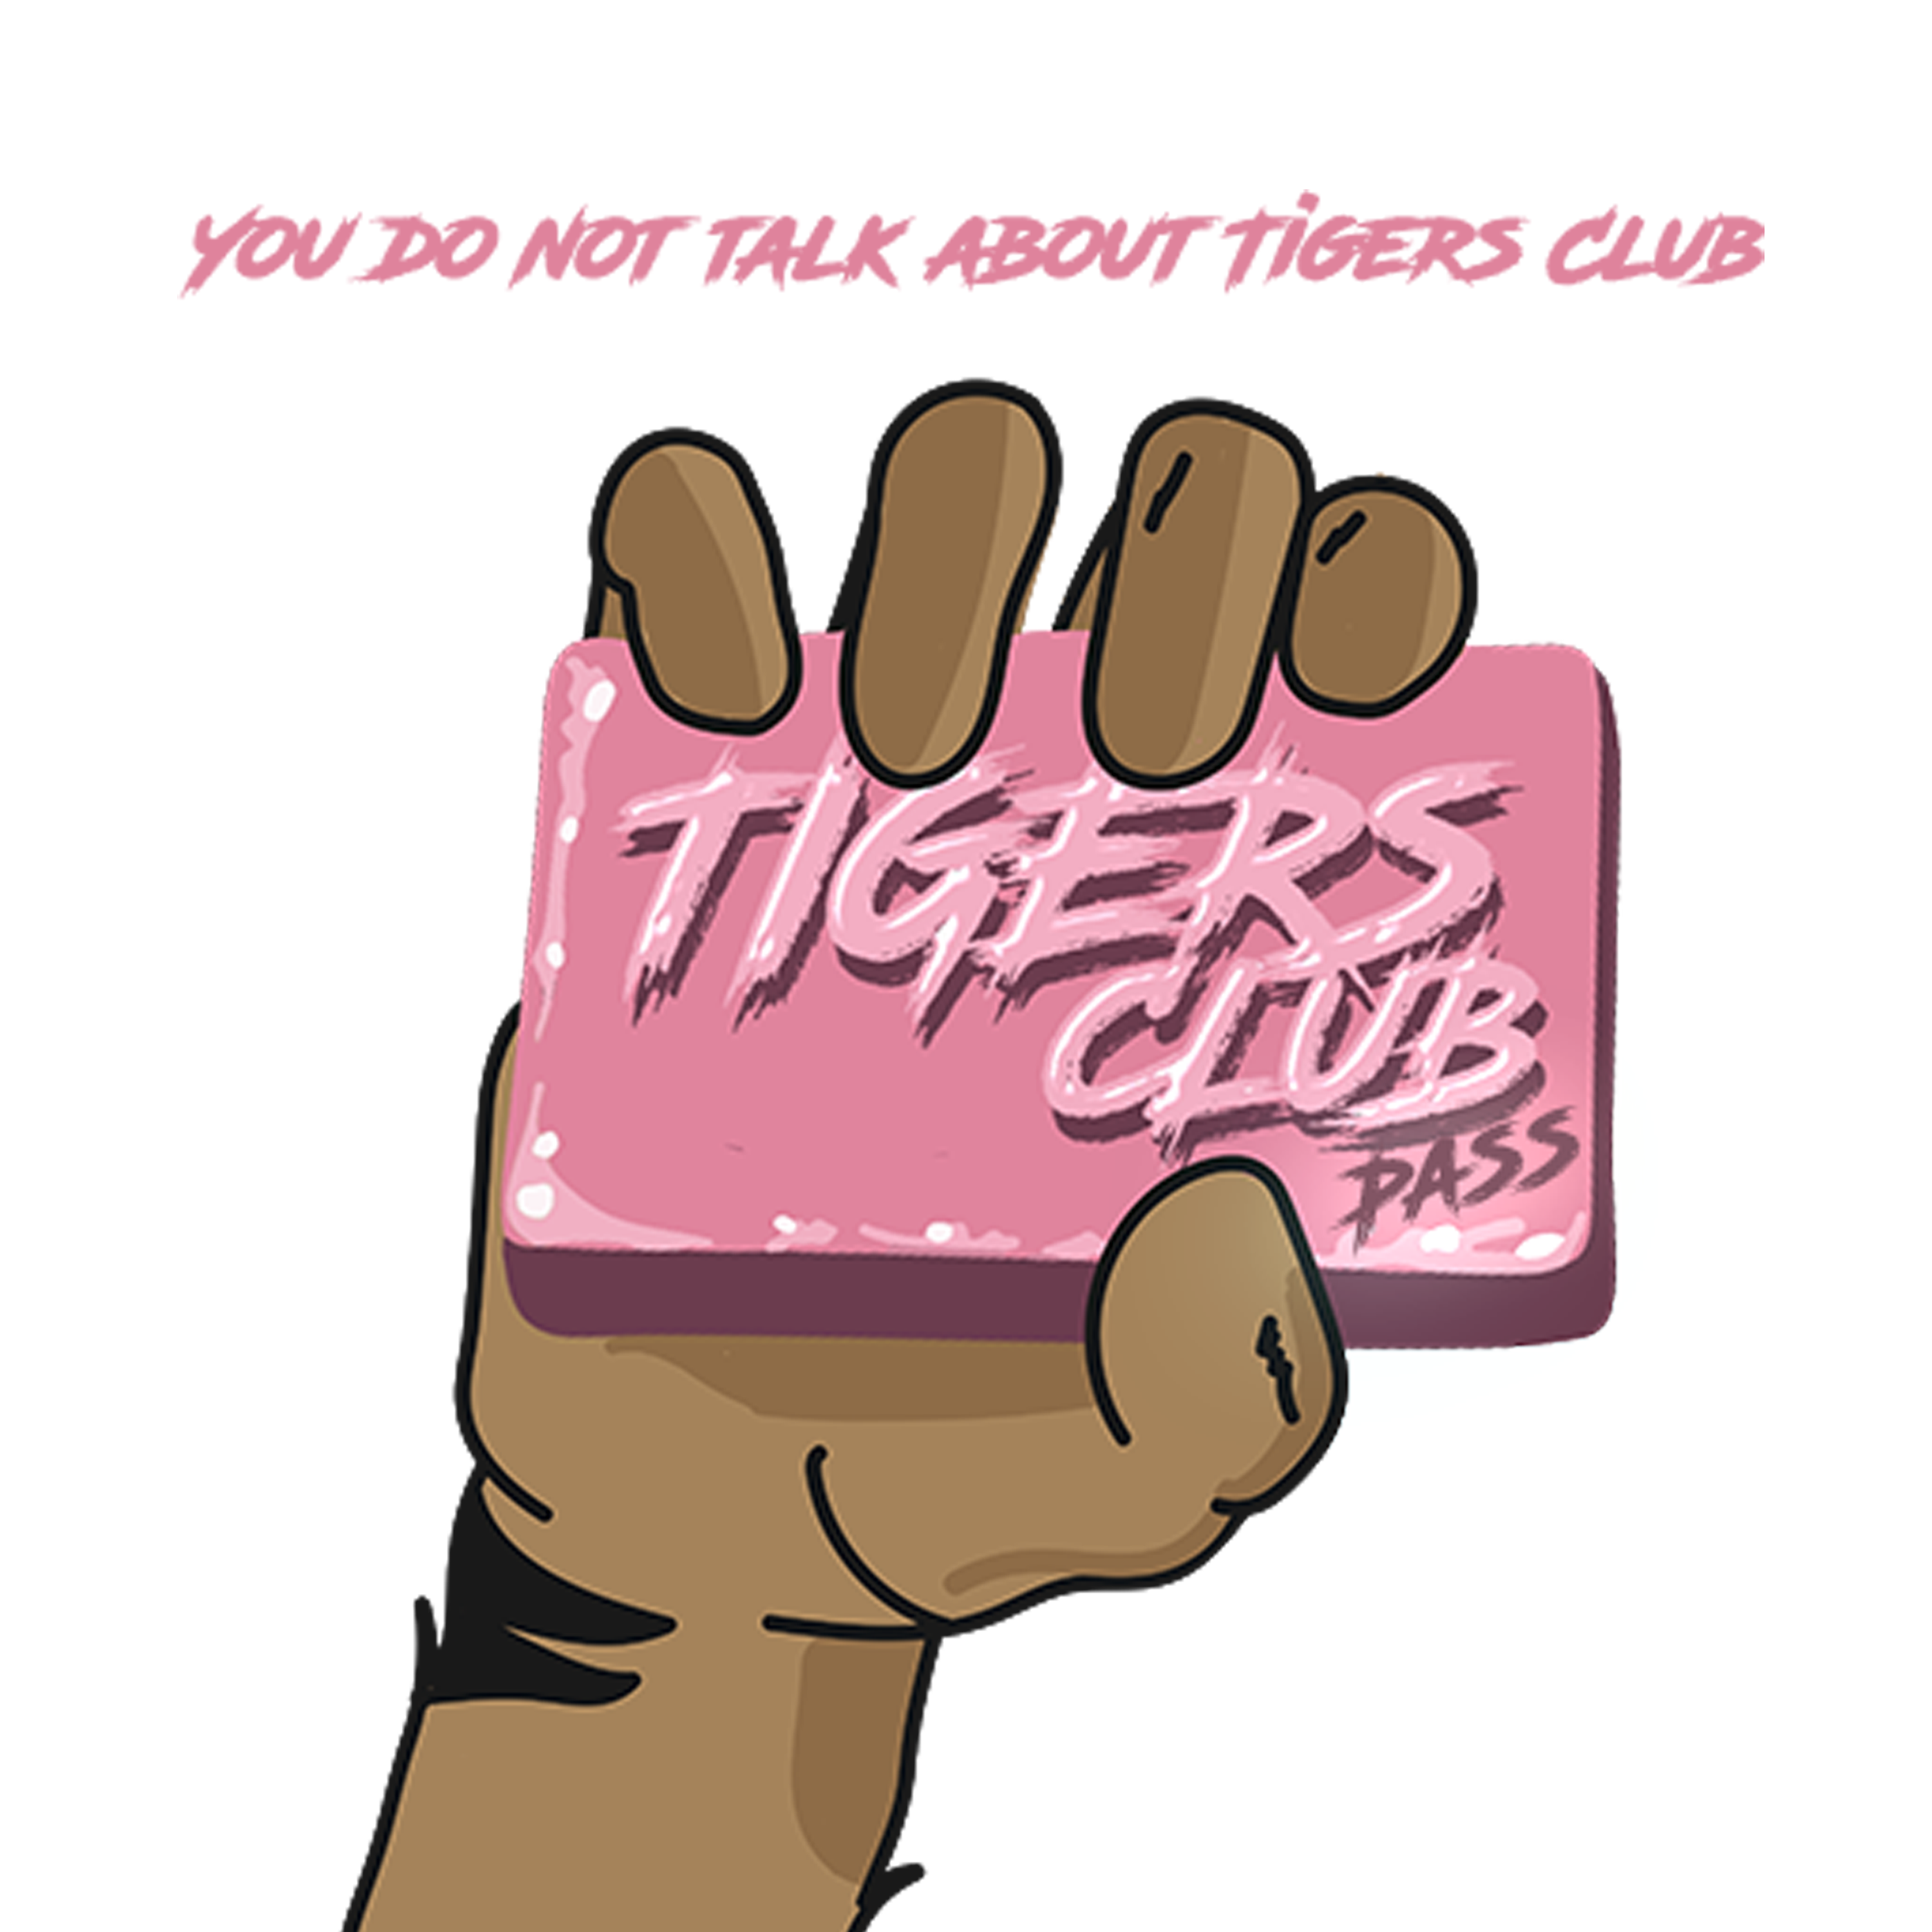 Tigers Club Pass